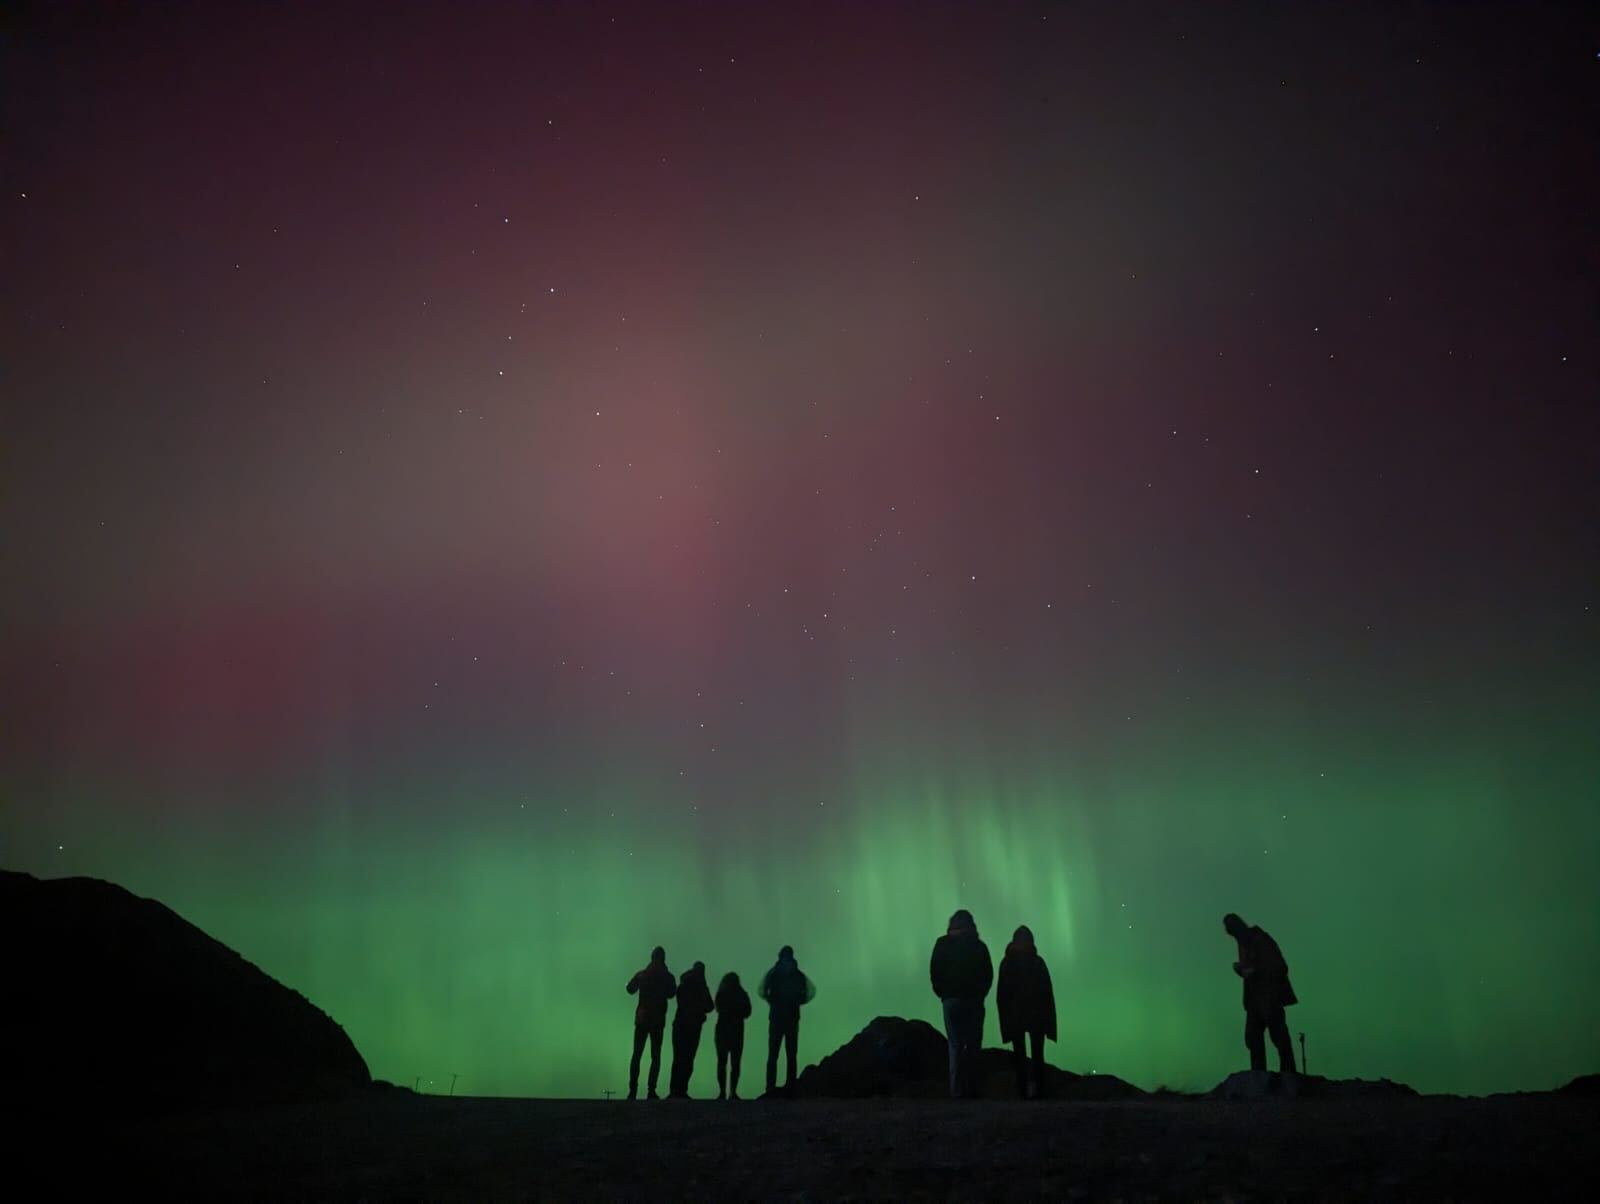 Image of the northern lights from Torridon, Scotland. Credit: Lauren Orr